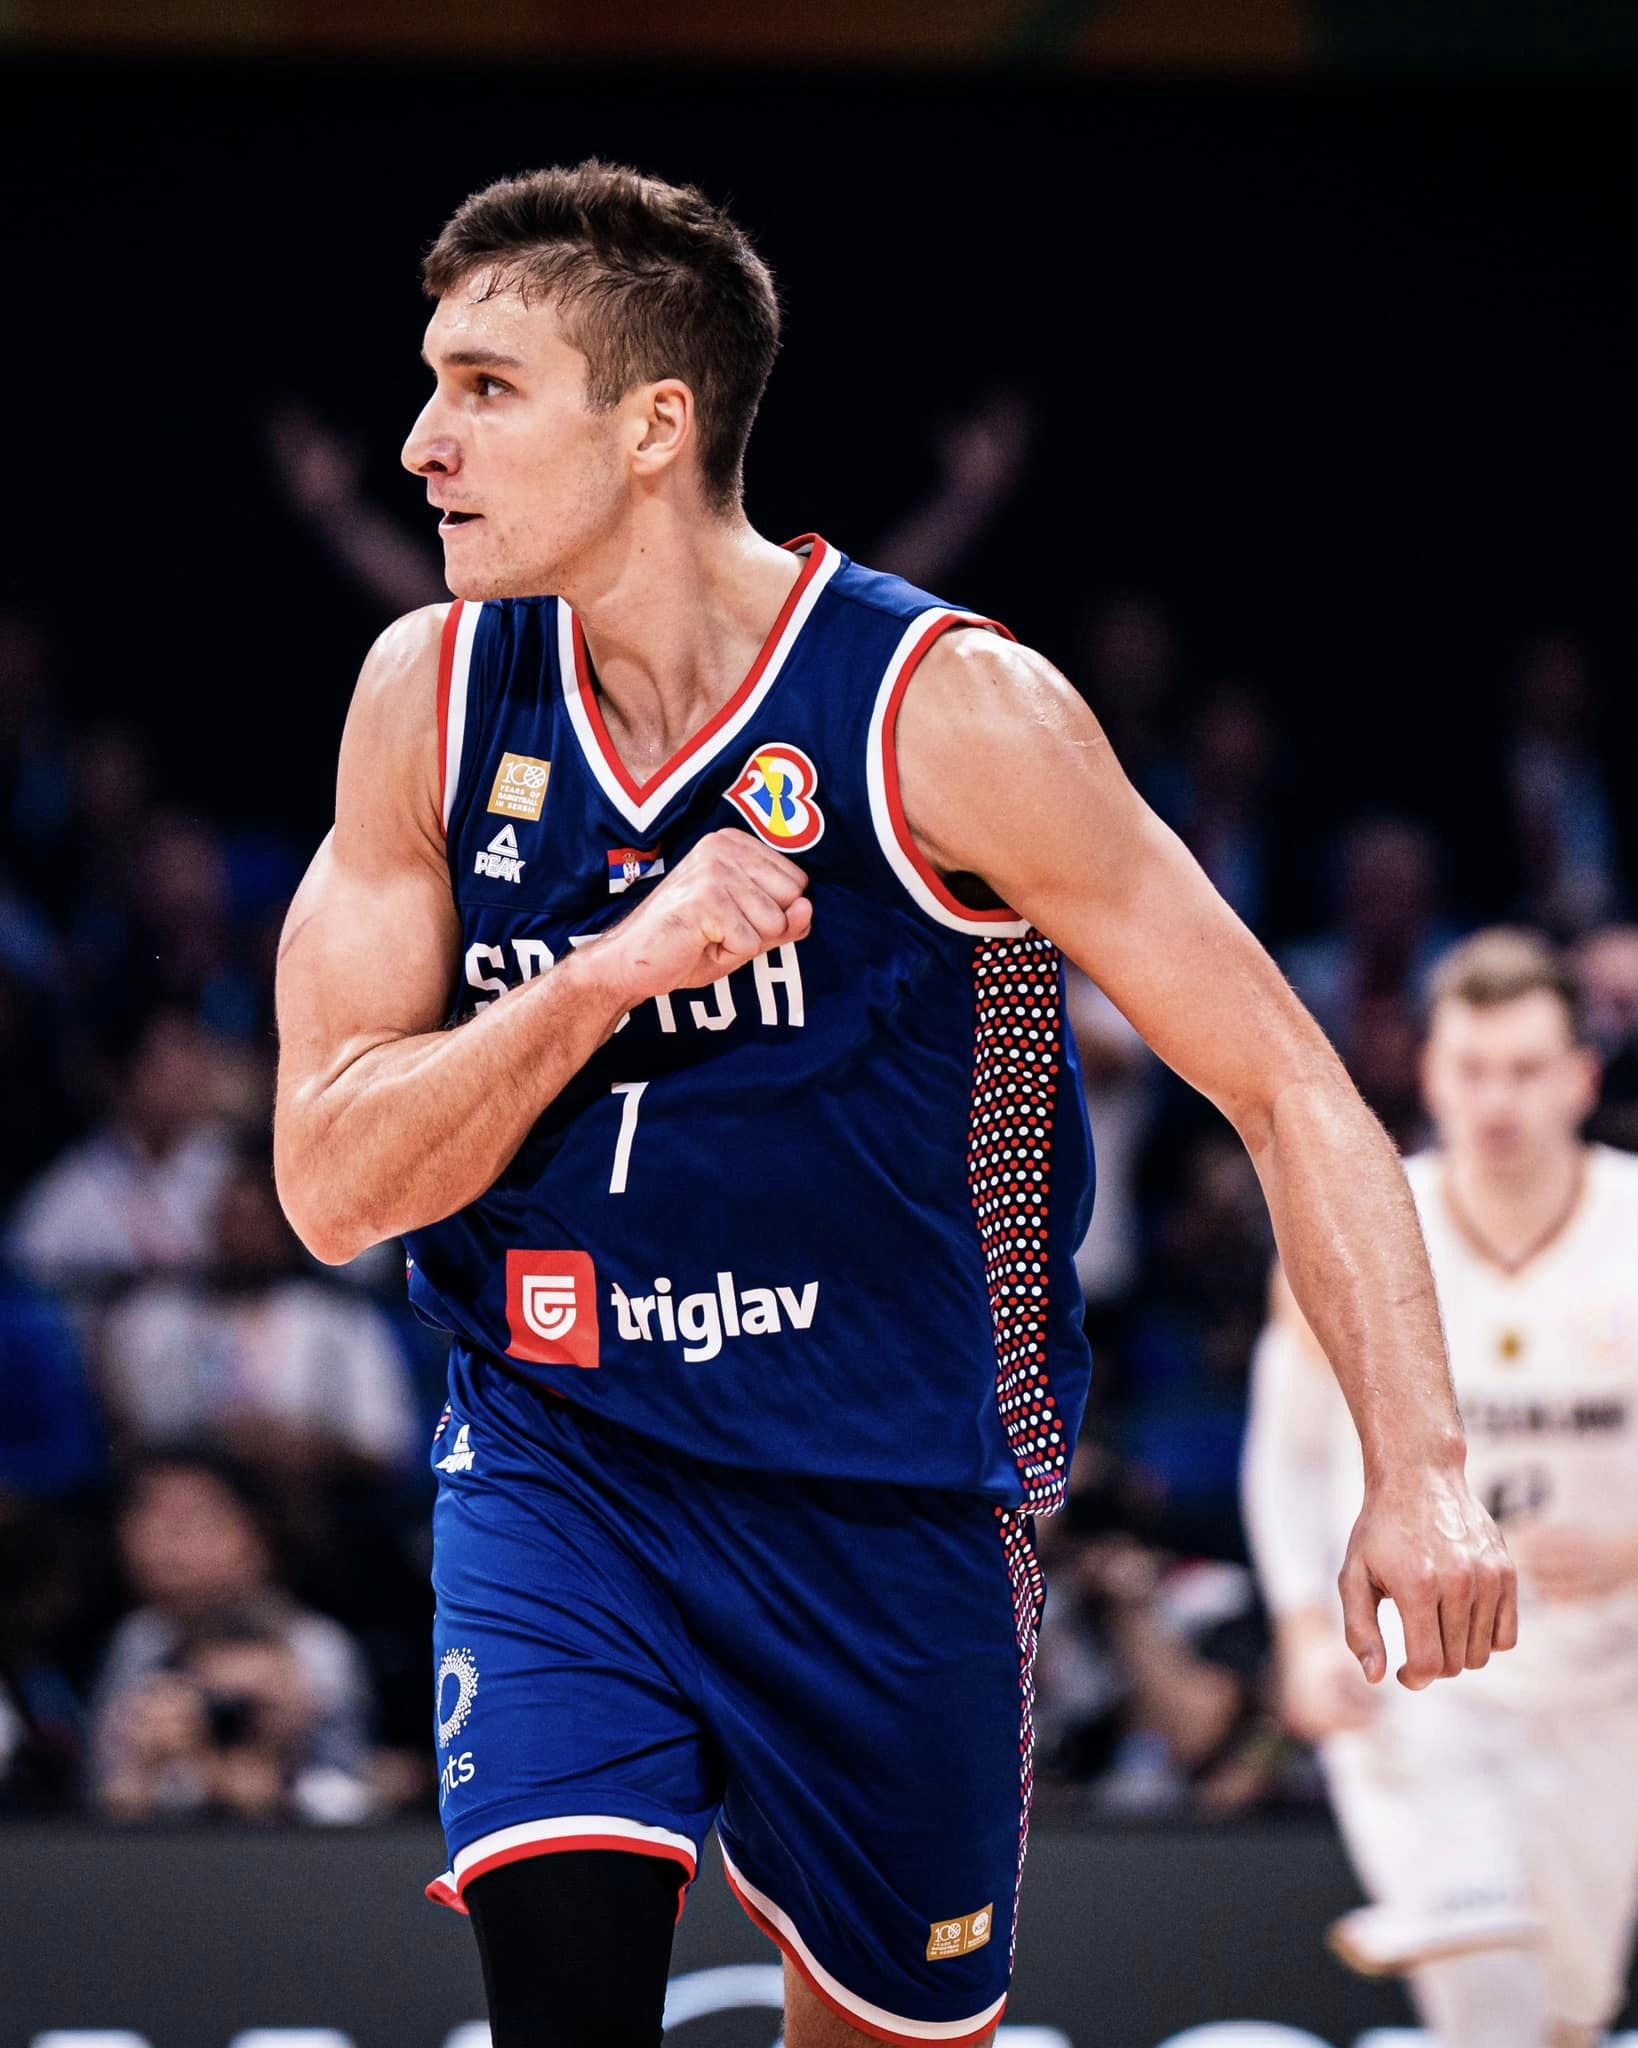 Bogan Bogdanovic representing Serbia at the 2023 FIBA World Cup